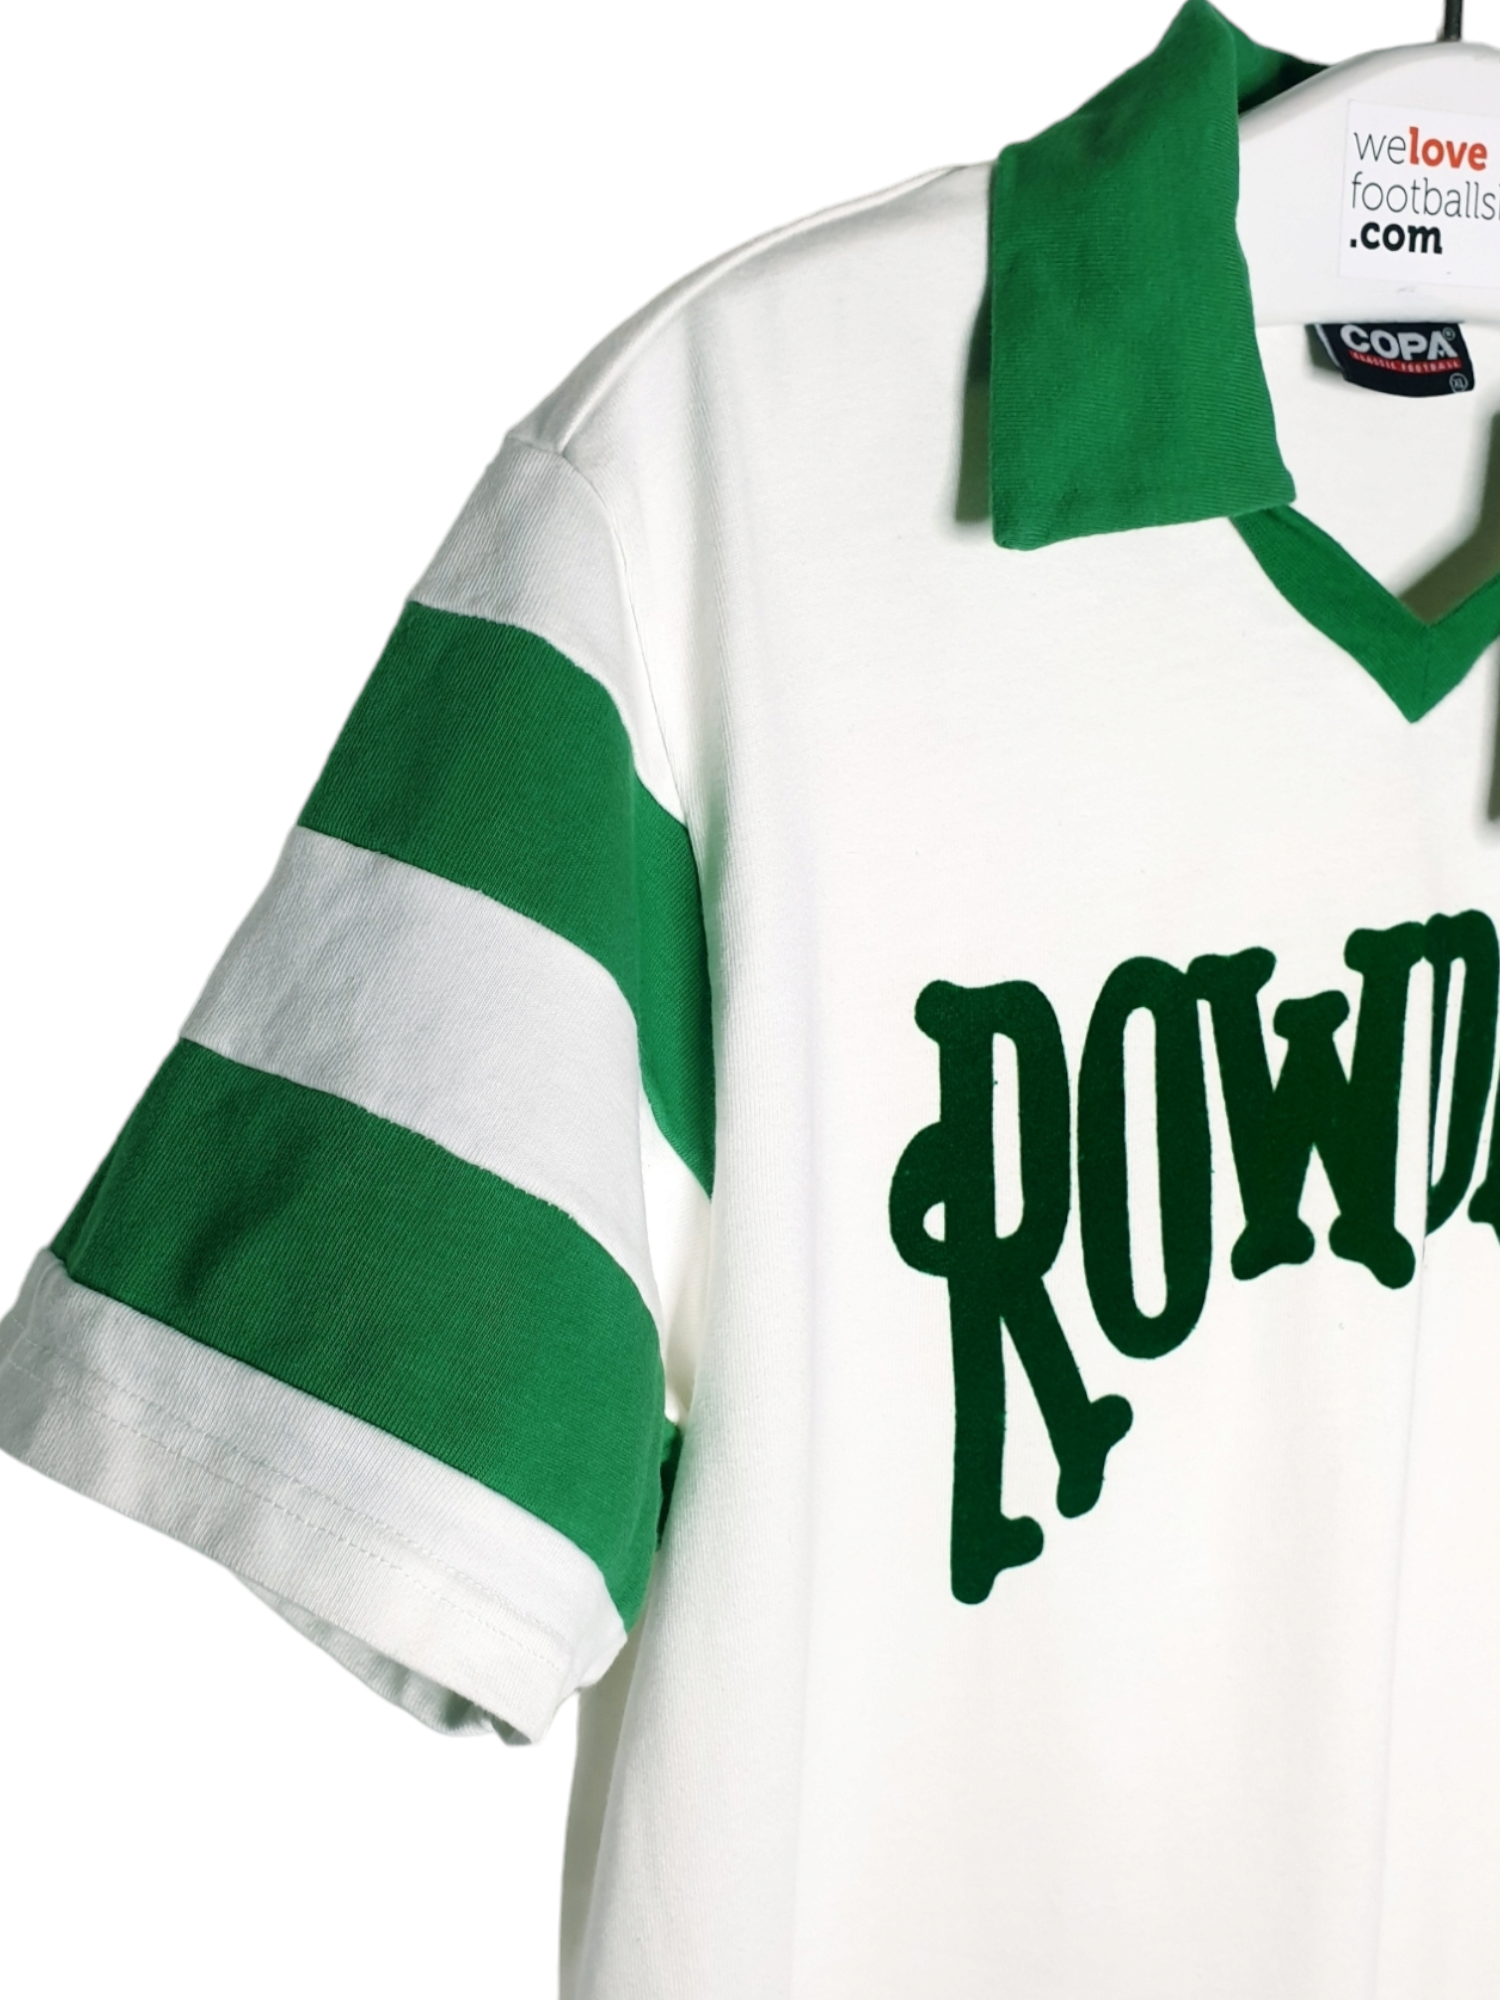 Tampa Bay Rowdies Retro Shirt 78 Copa